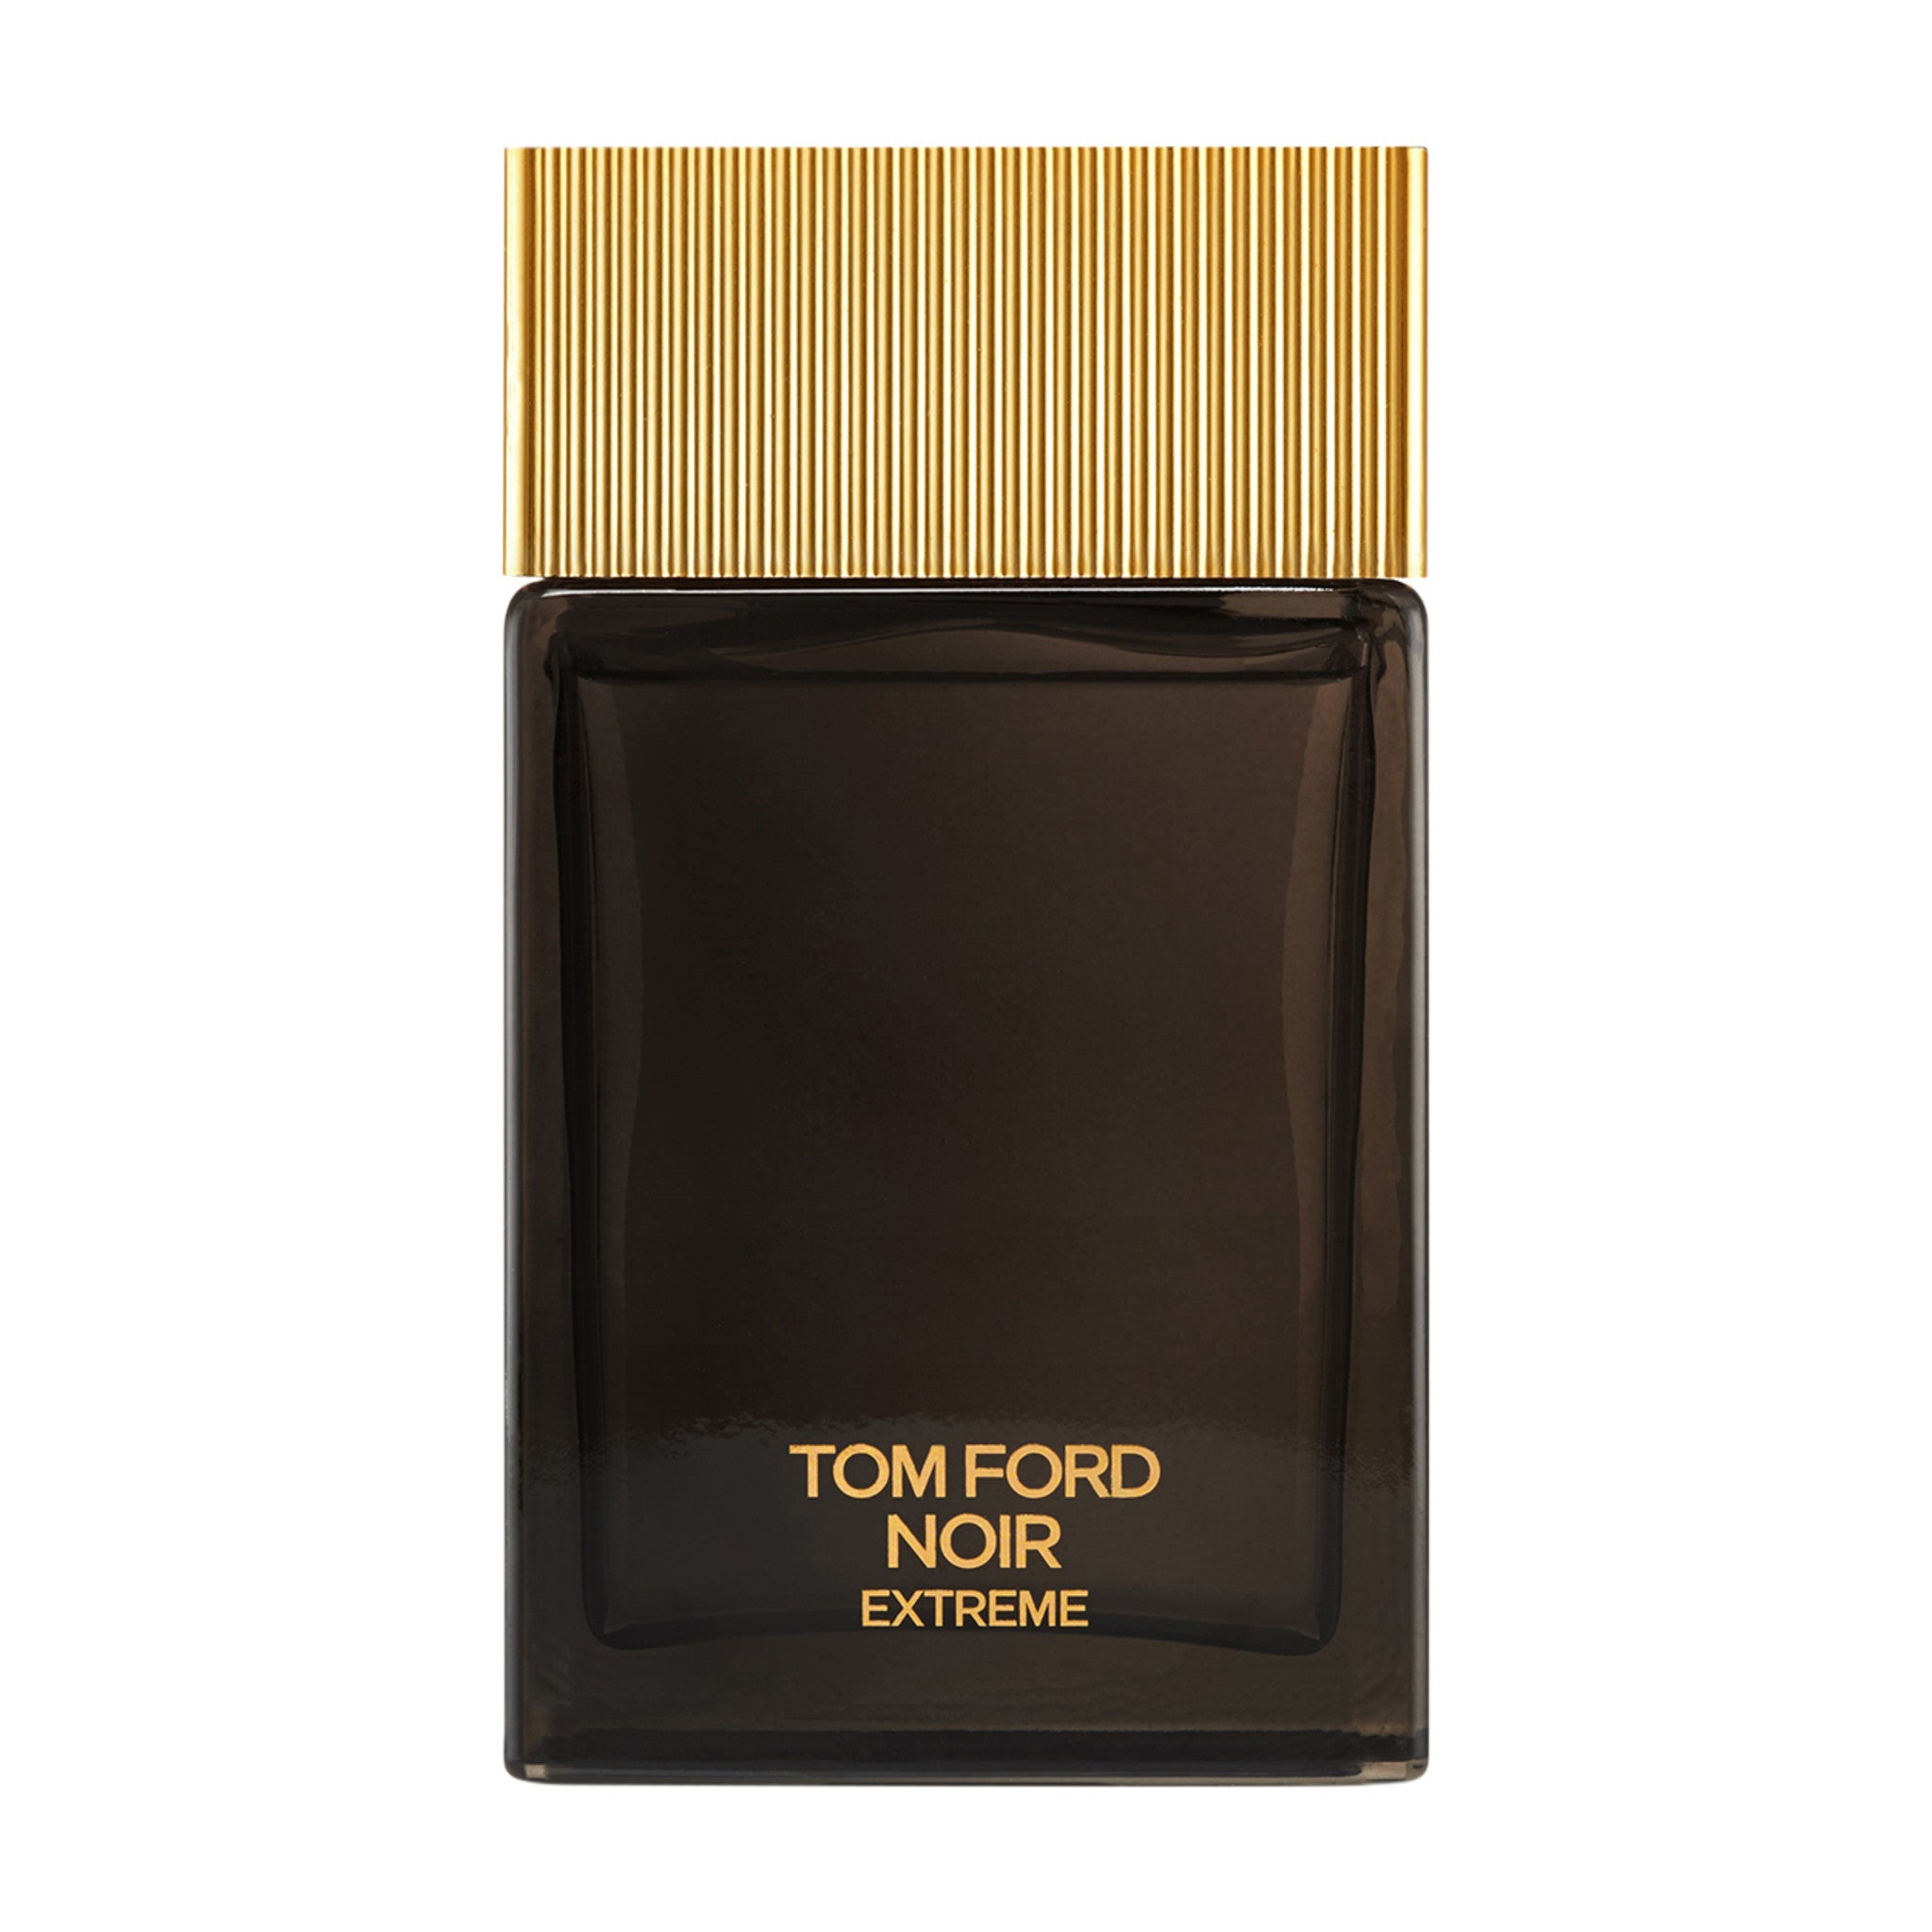 Tom Ford Noir Extreme Parfum Size variant: 3.4 oz | 100 ml main image.